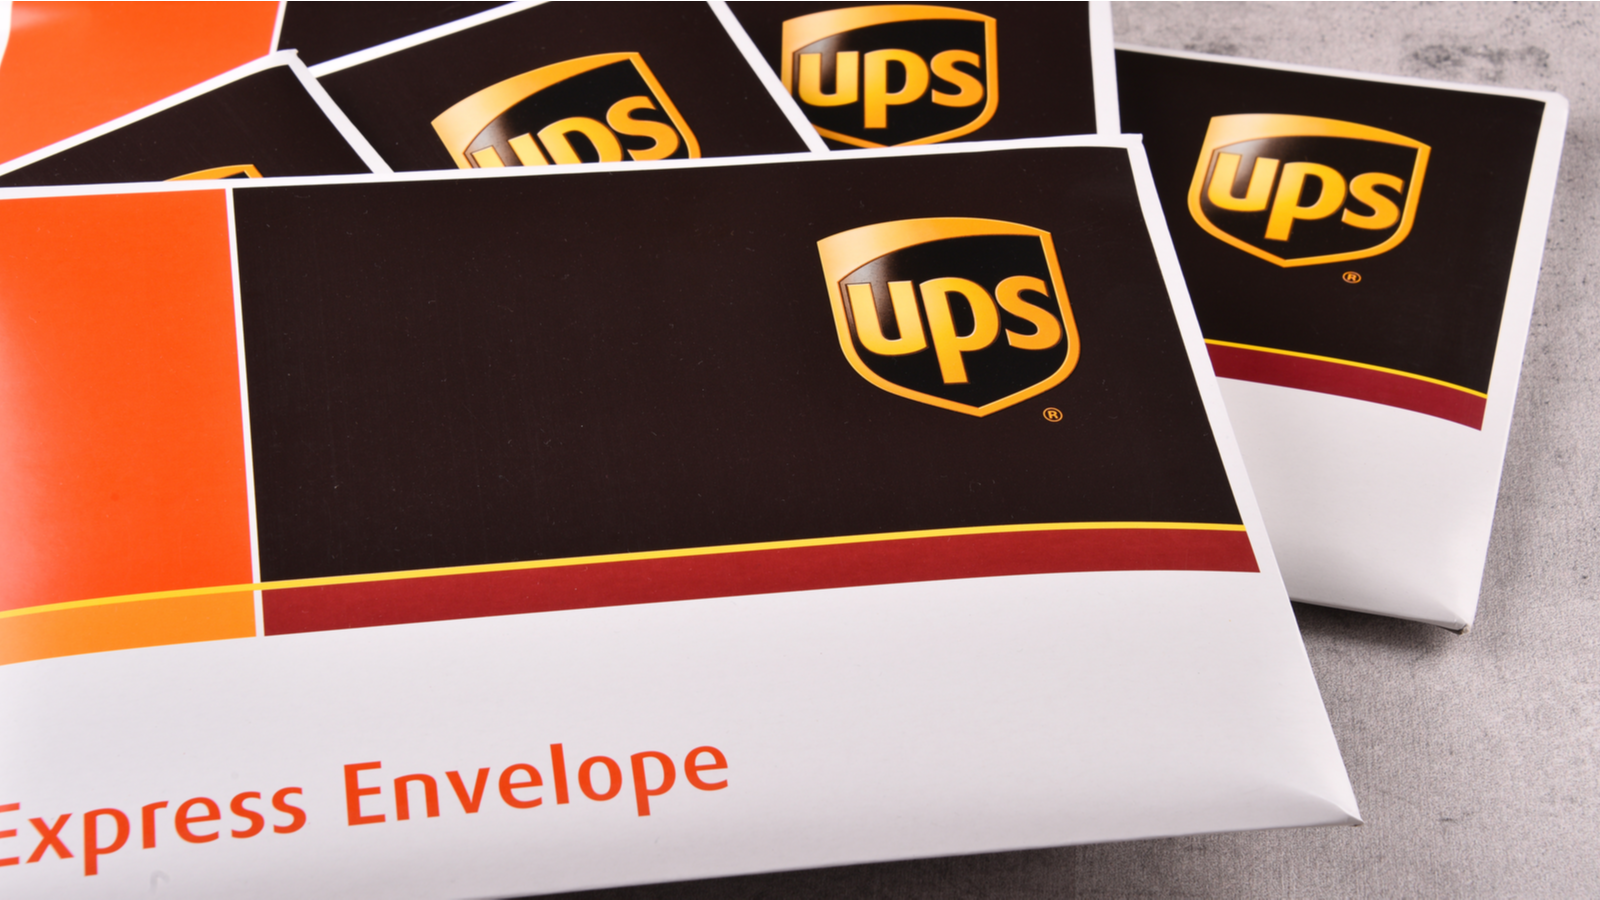 Envelopes with UPS logo on them. UPS stock.